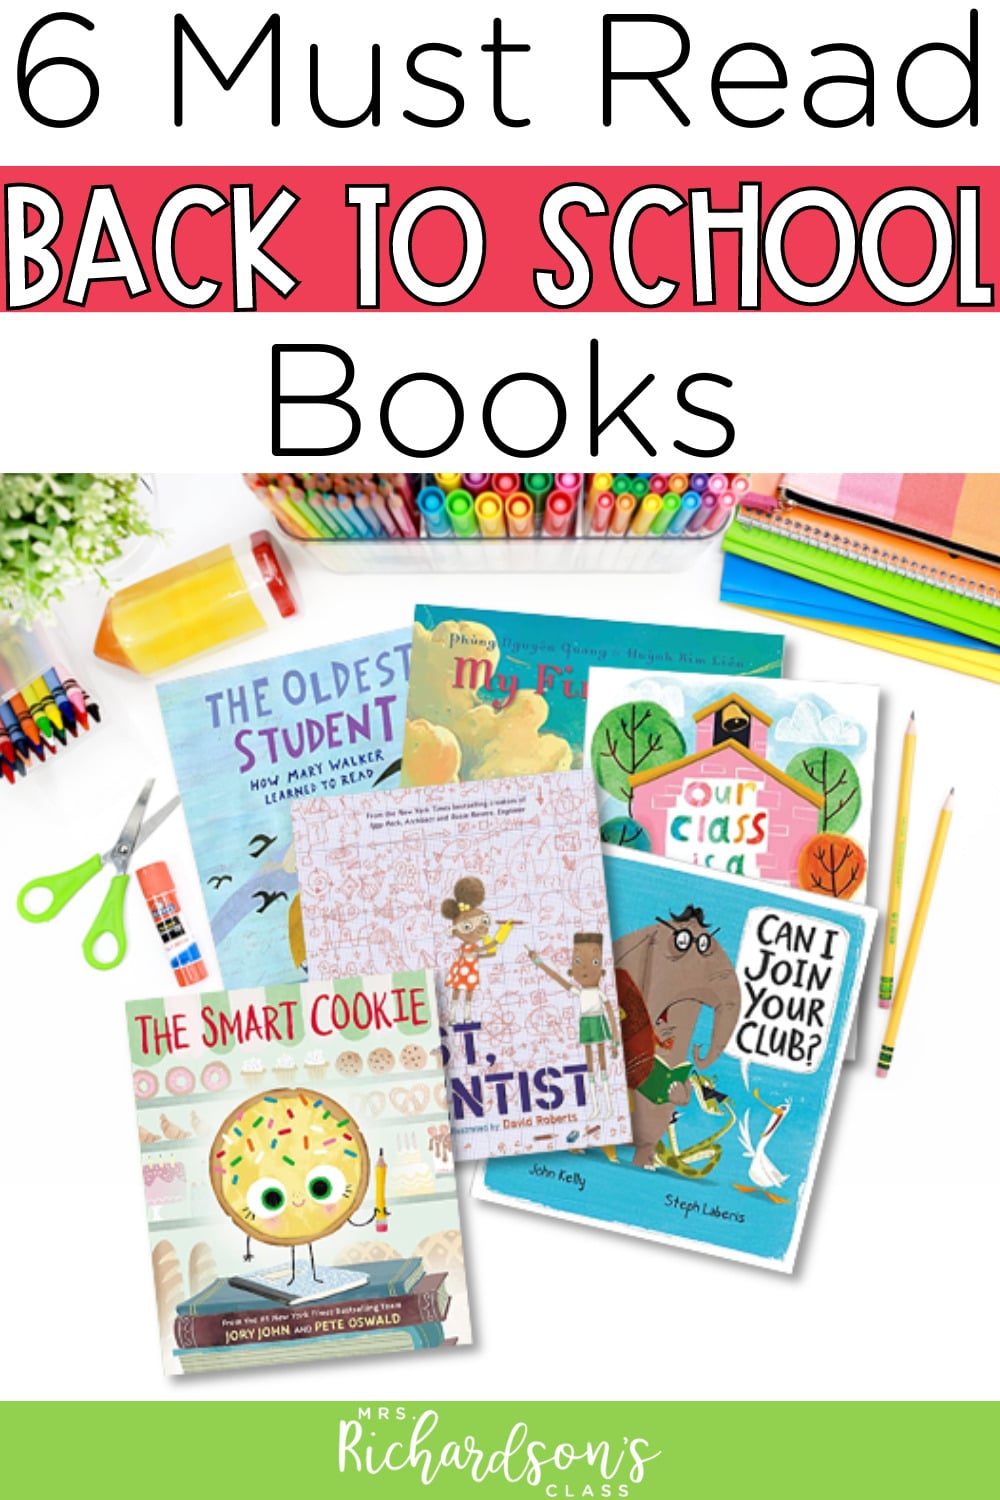 August Lesson Spotlight: Back to School, Back to Basics!